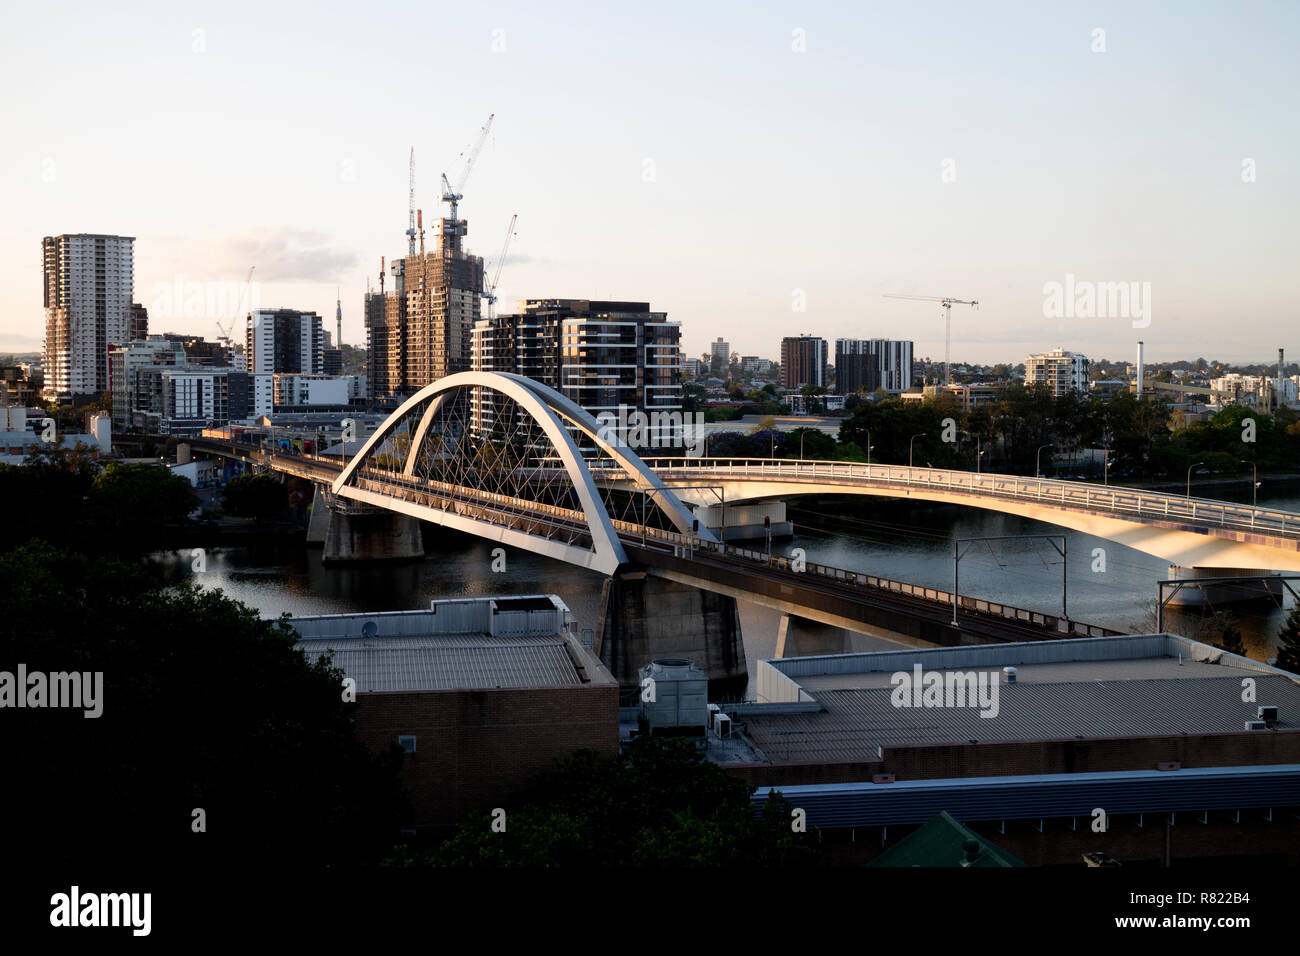 Merivale rail bridge and the Go Between Bridge, Brisbane, Queensland, Australia Stock Photo